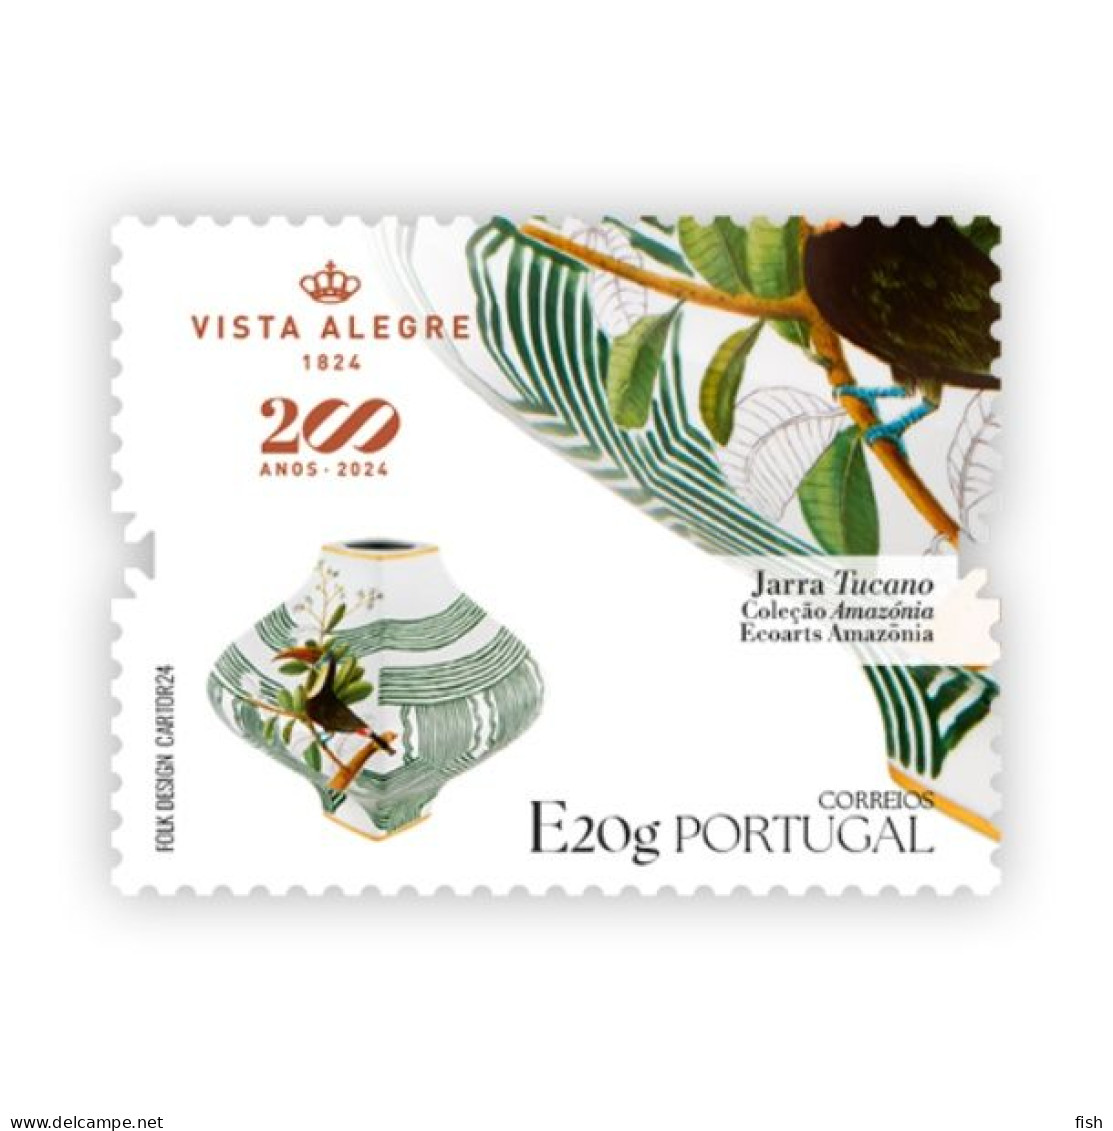 Portugal ** & 200 Years Of Vista Alegre, Tucano Jar, Amazonia Collection, Ecoarte Amazonia 1824-2024 (7199) - Environment & Climate Protection